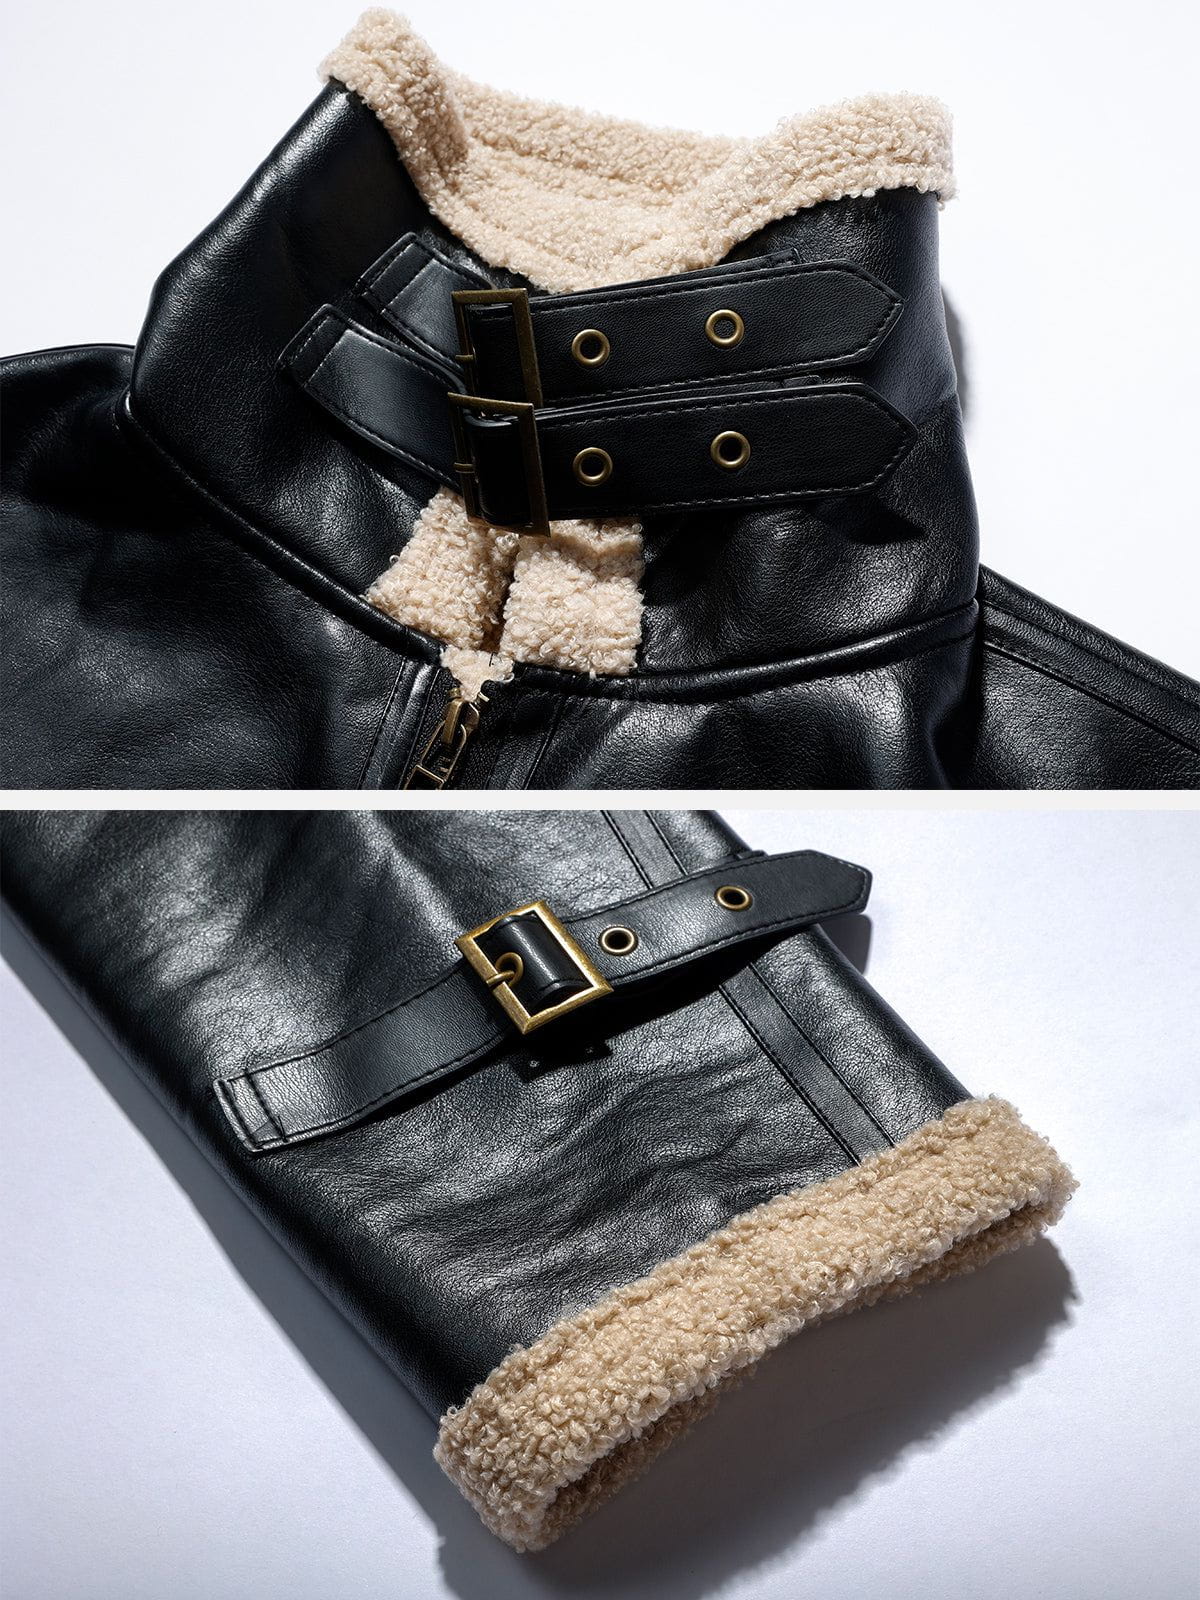 Majesda® - Zipper Lapel PU Borg Jacket outfit ideas, streetwear fashion - majesda.com